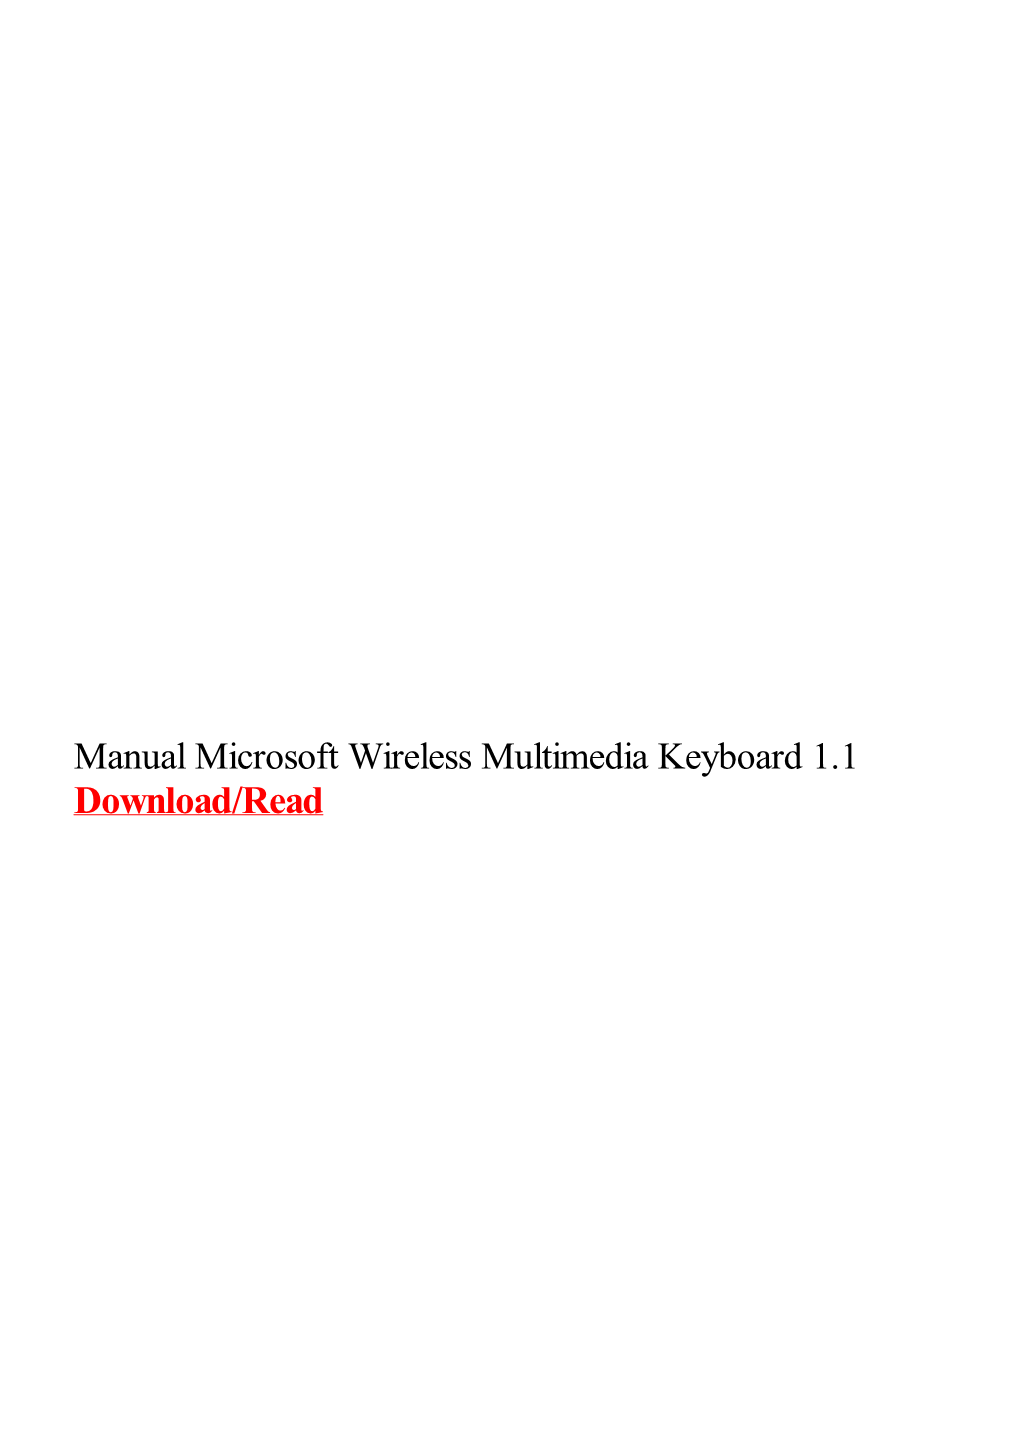 Manual Microsoft Wireless Multimedia Keyboard 1.1